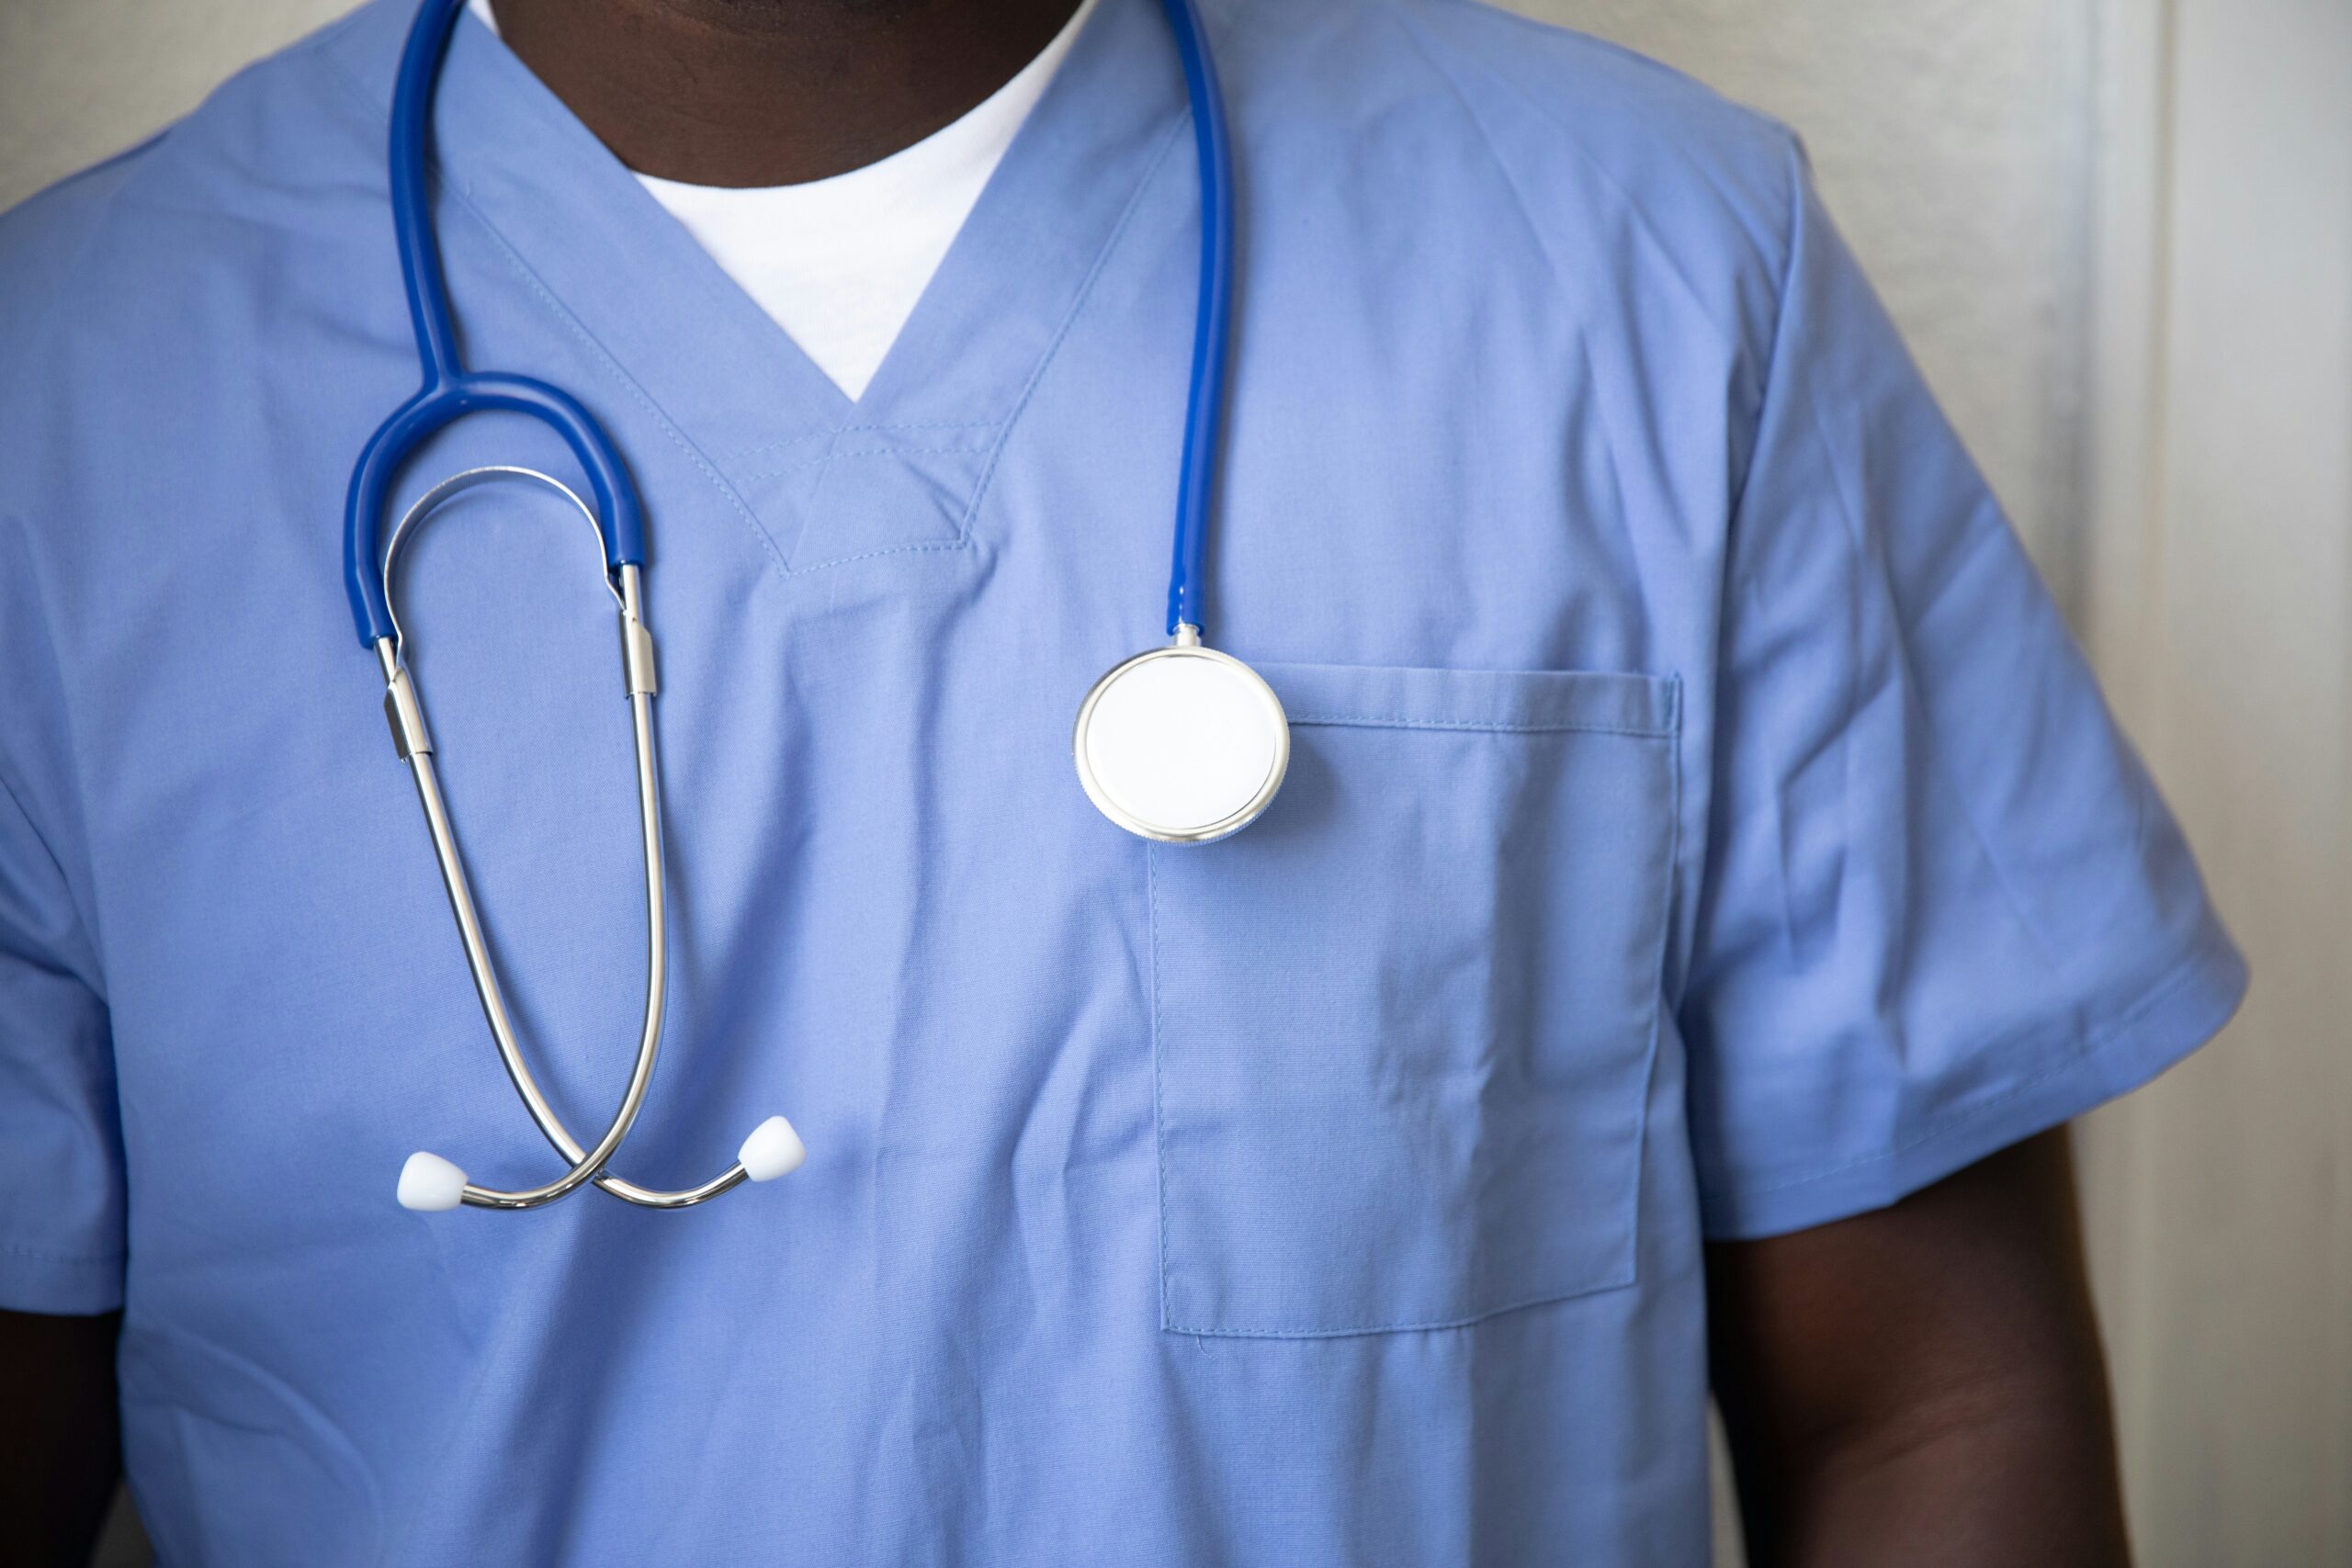 Can you sue a doctor for malpractice in Pennsylvania?